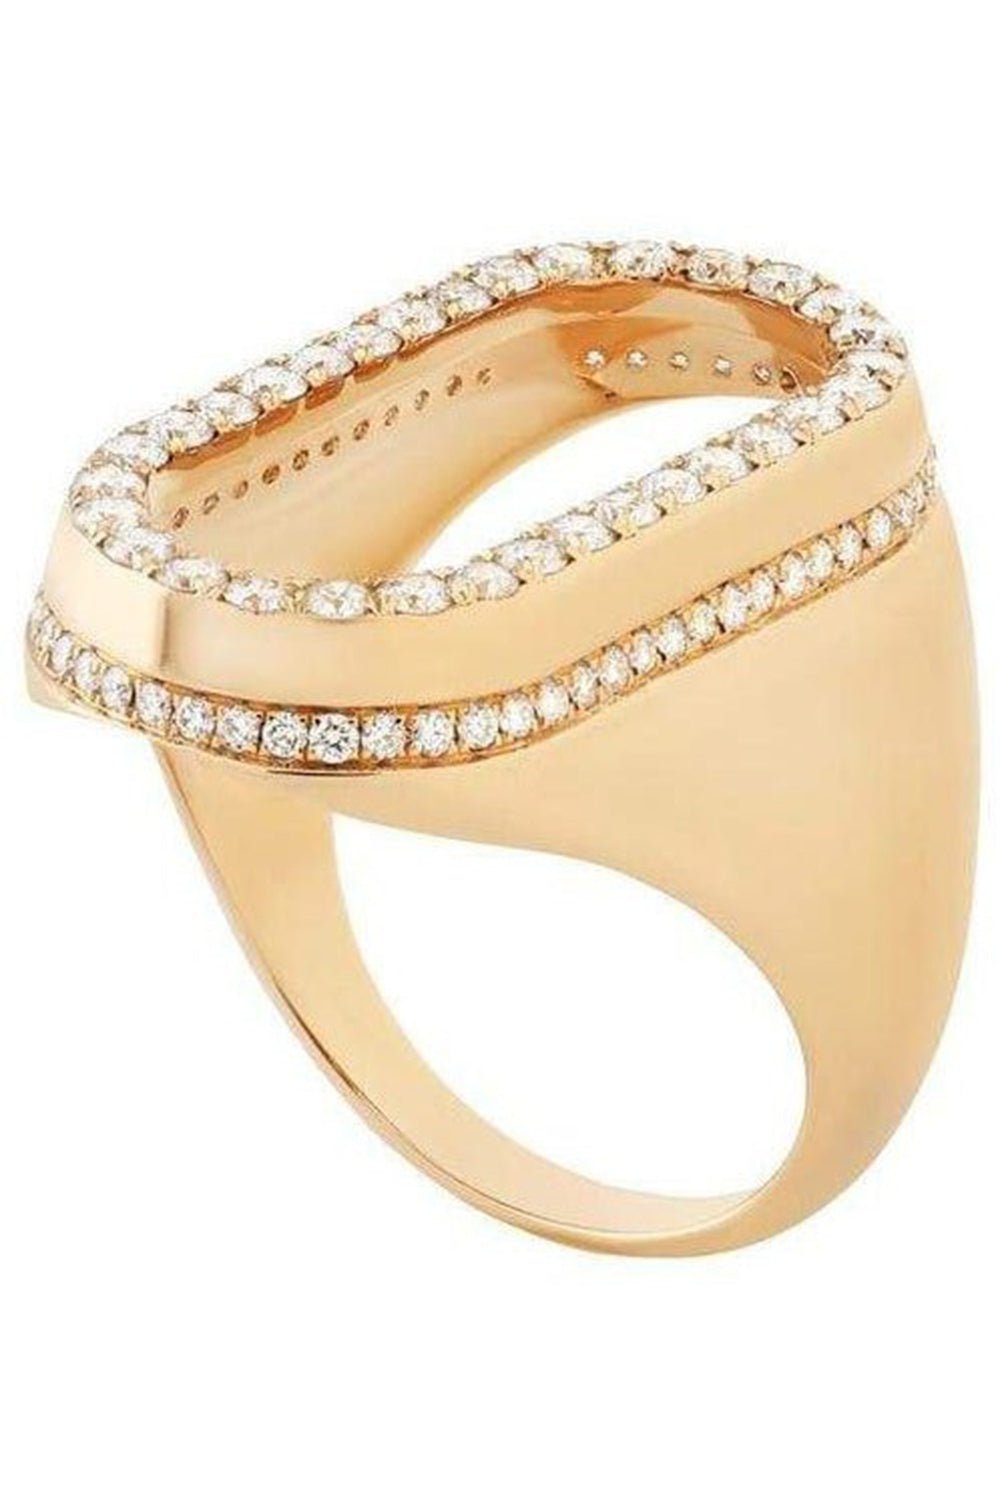 STATE PROPERTY-Dupin Diamond Signet Ring-YELLOW GOLD